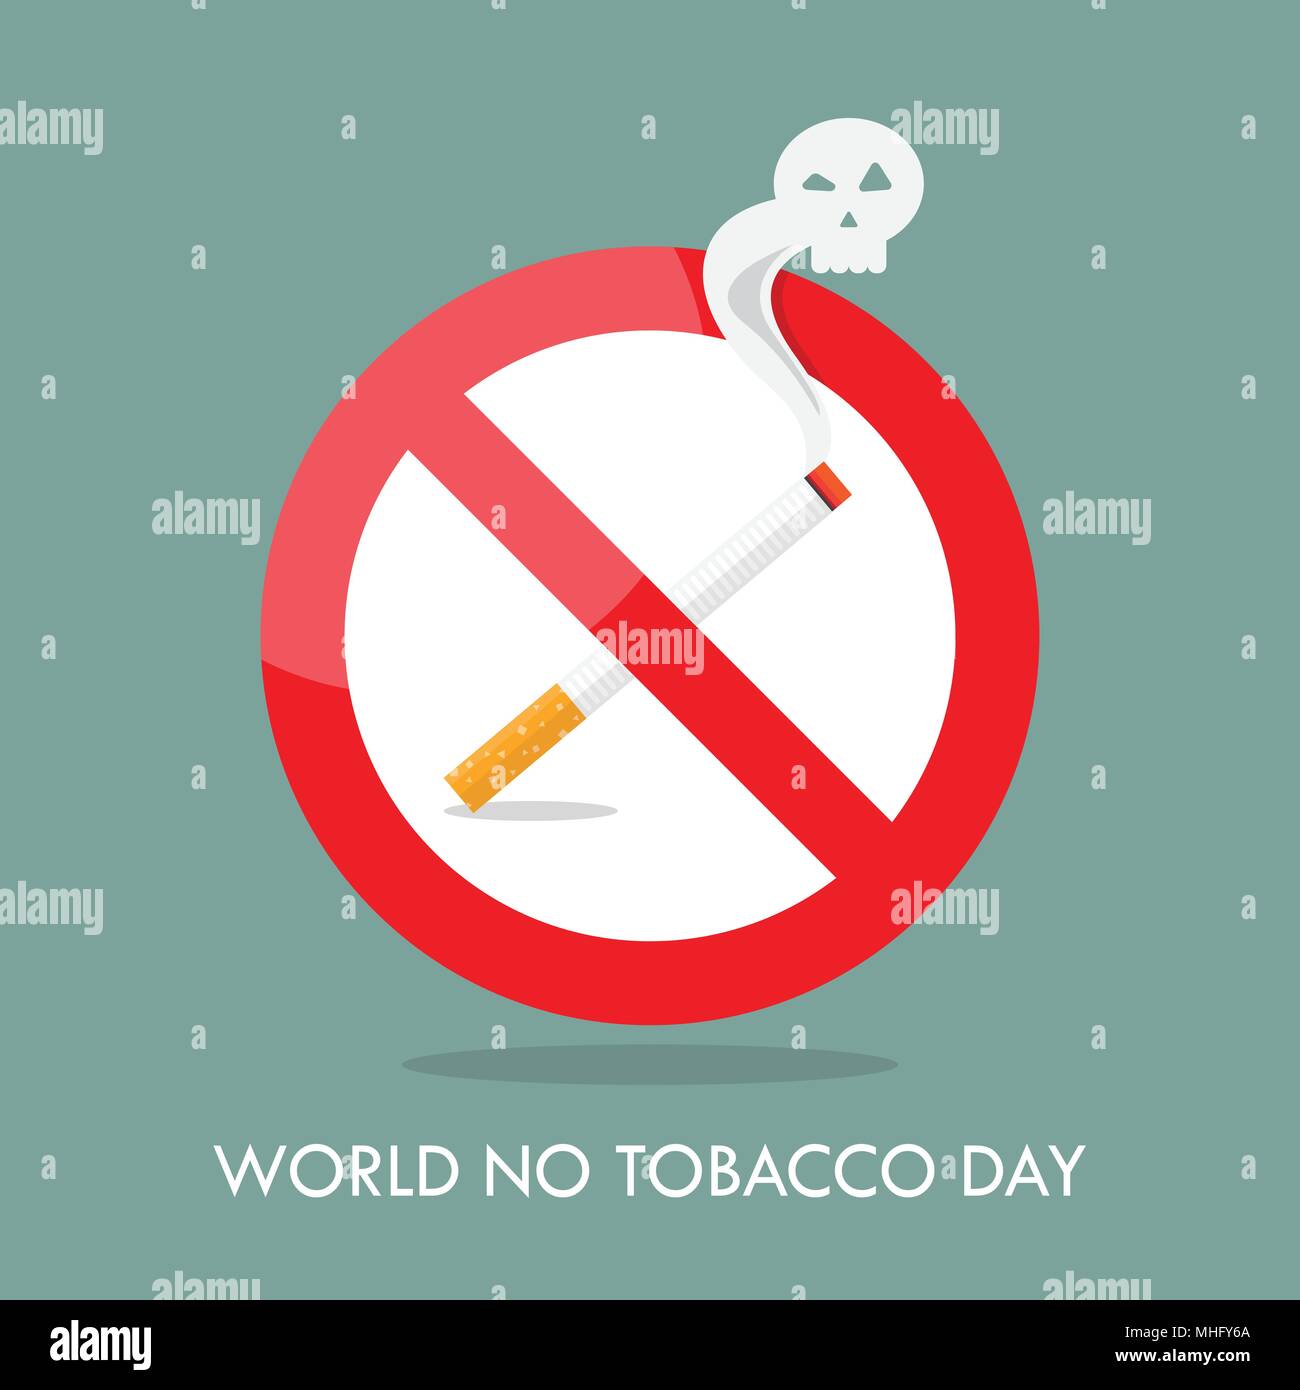 World no tobacco day prohibition sign. Vector illustration Stock Vector